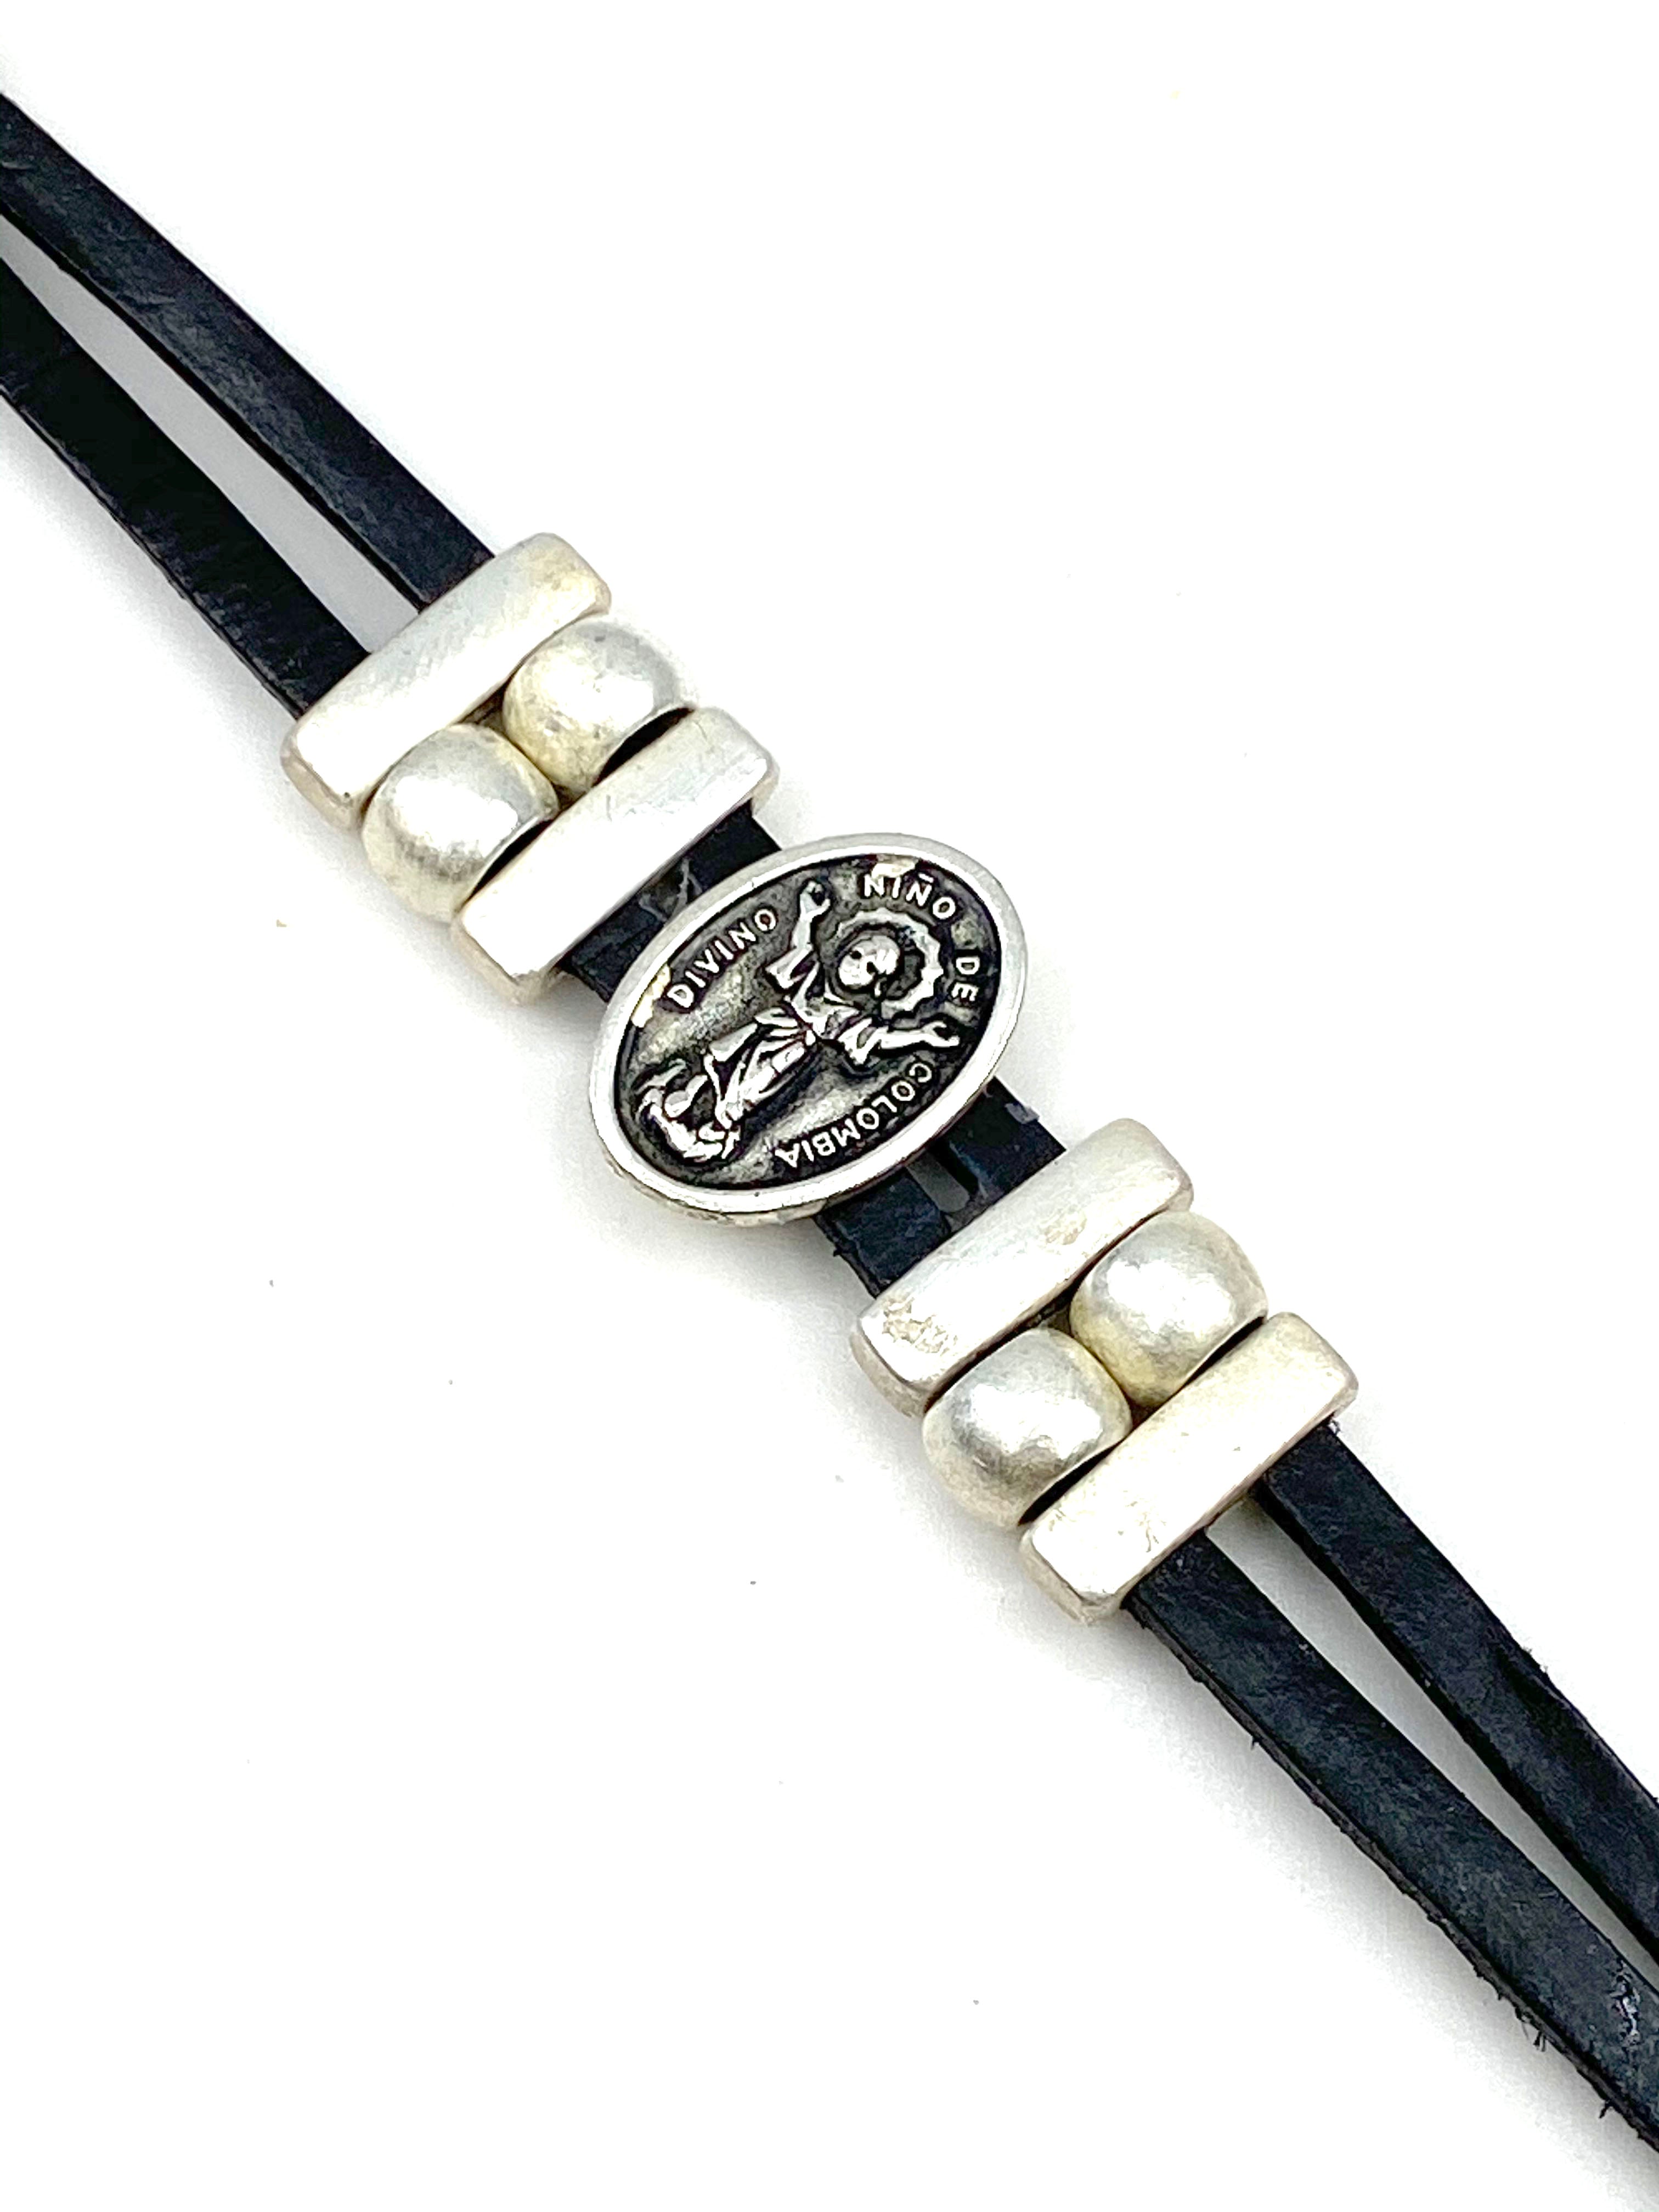 Bracelet Divino Nino Jesus bracelet handmade jewelry with Genuine Double Leather straps by Graciela's Collection